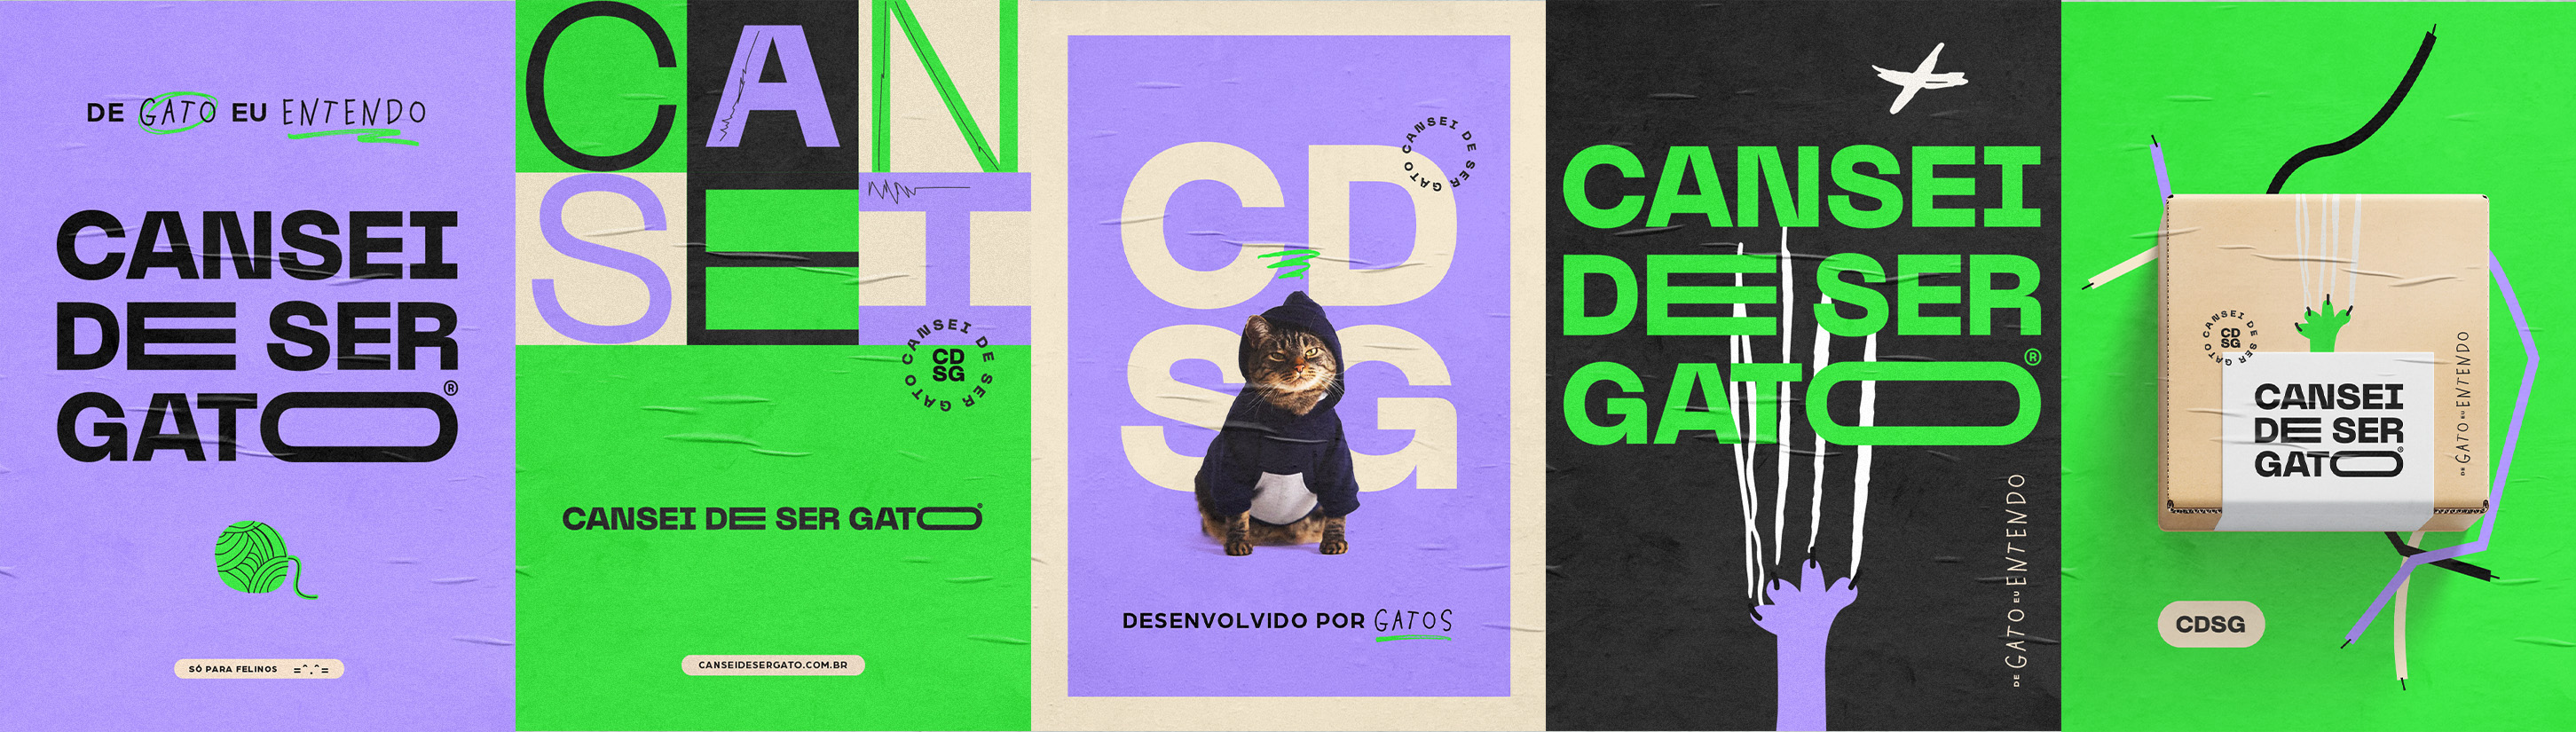 CDSG_posters-copy